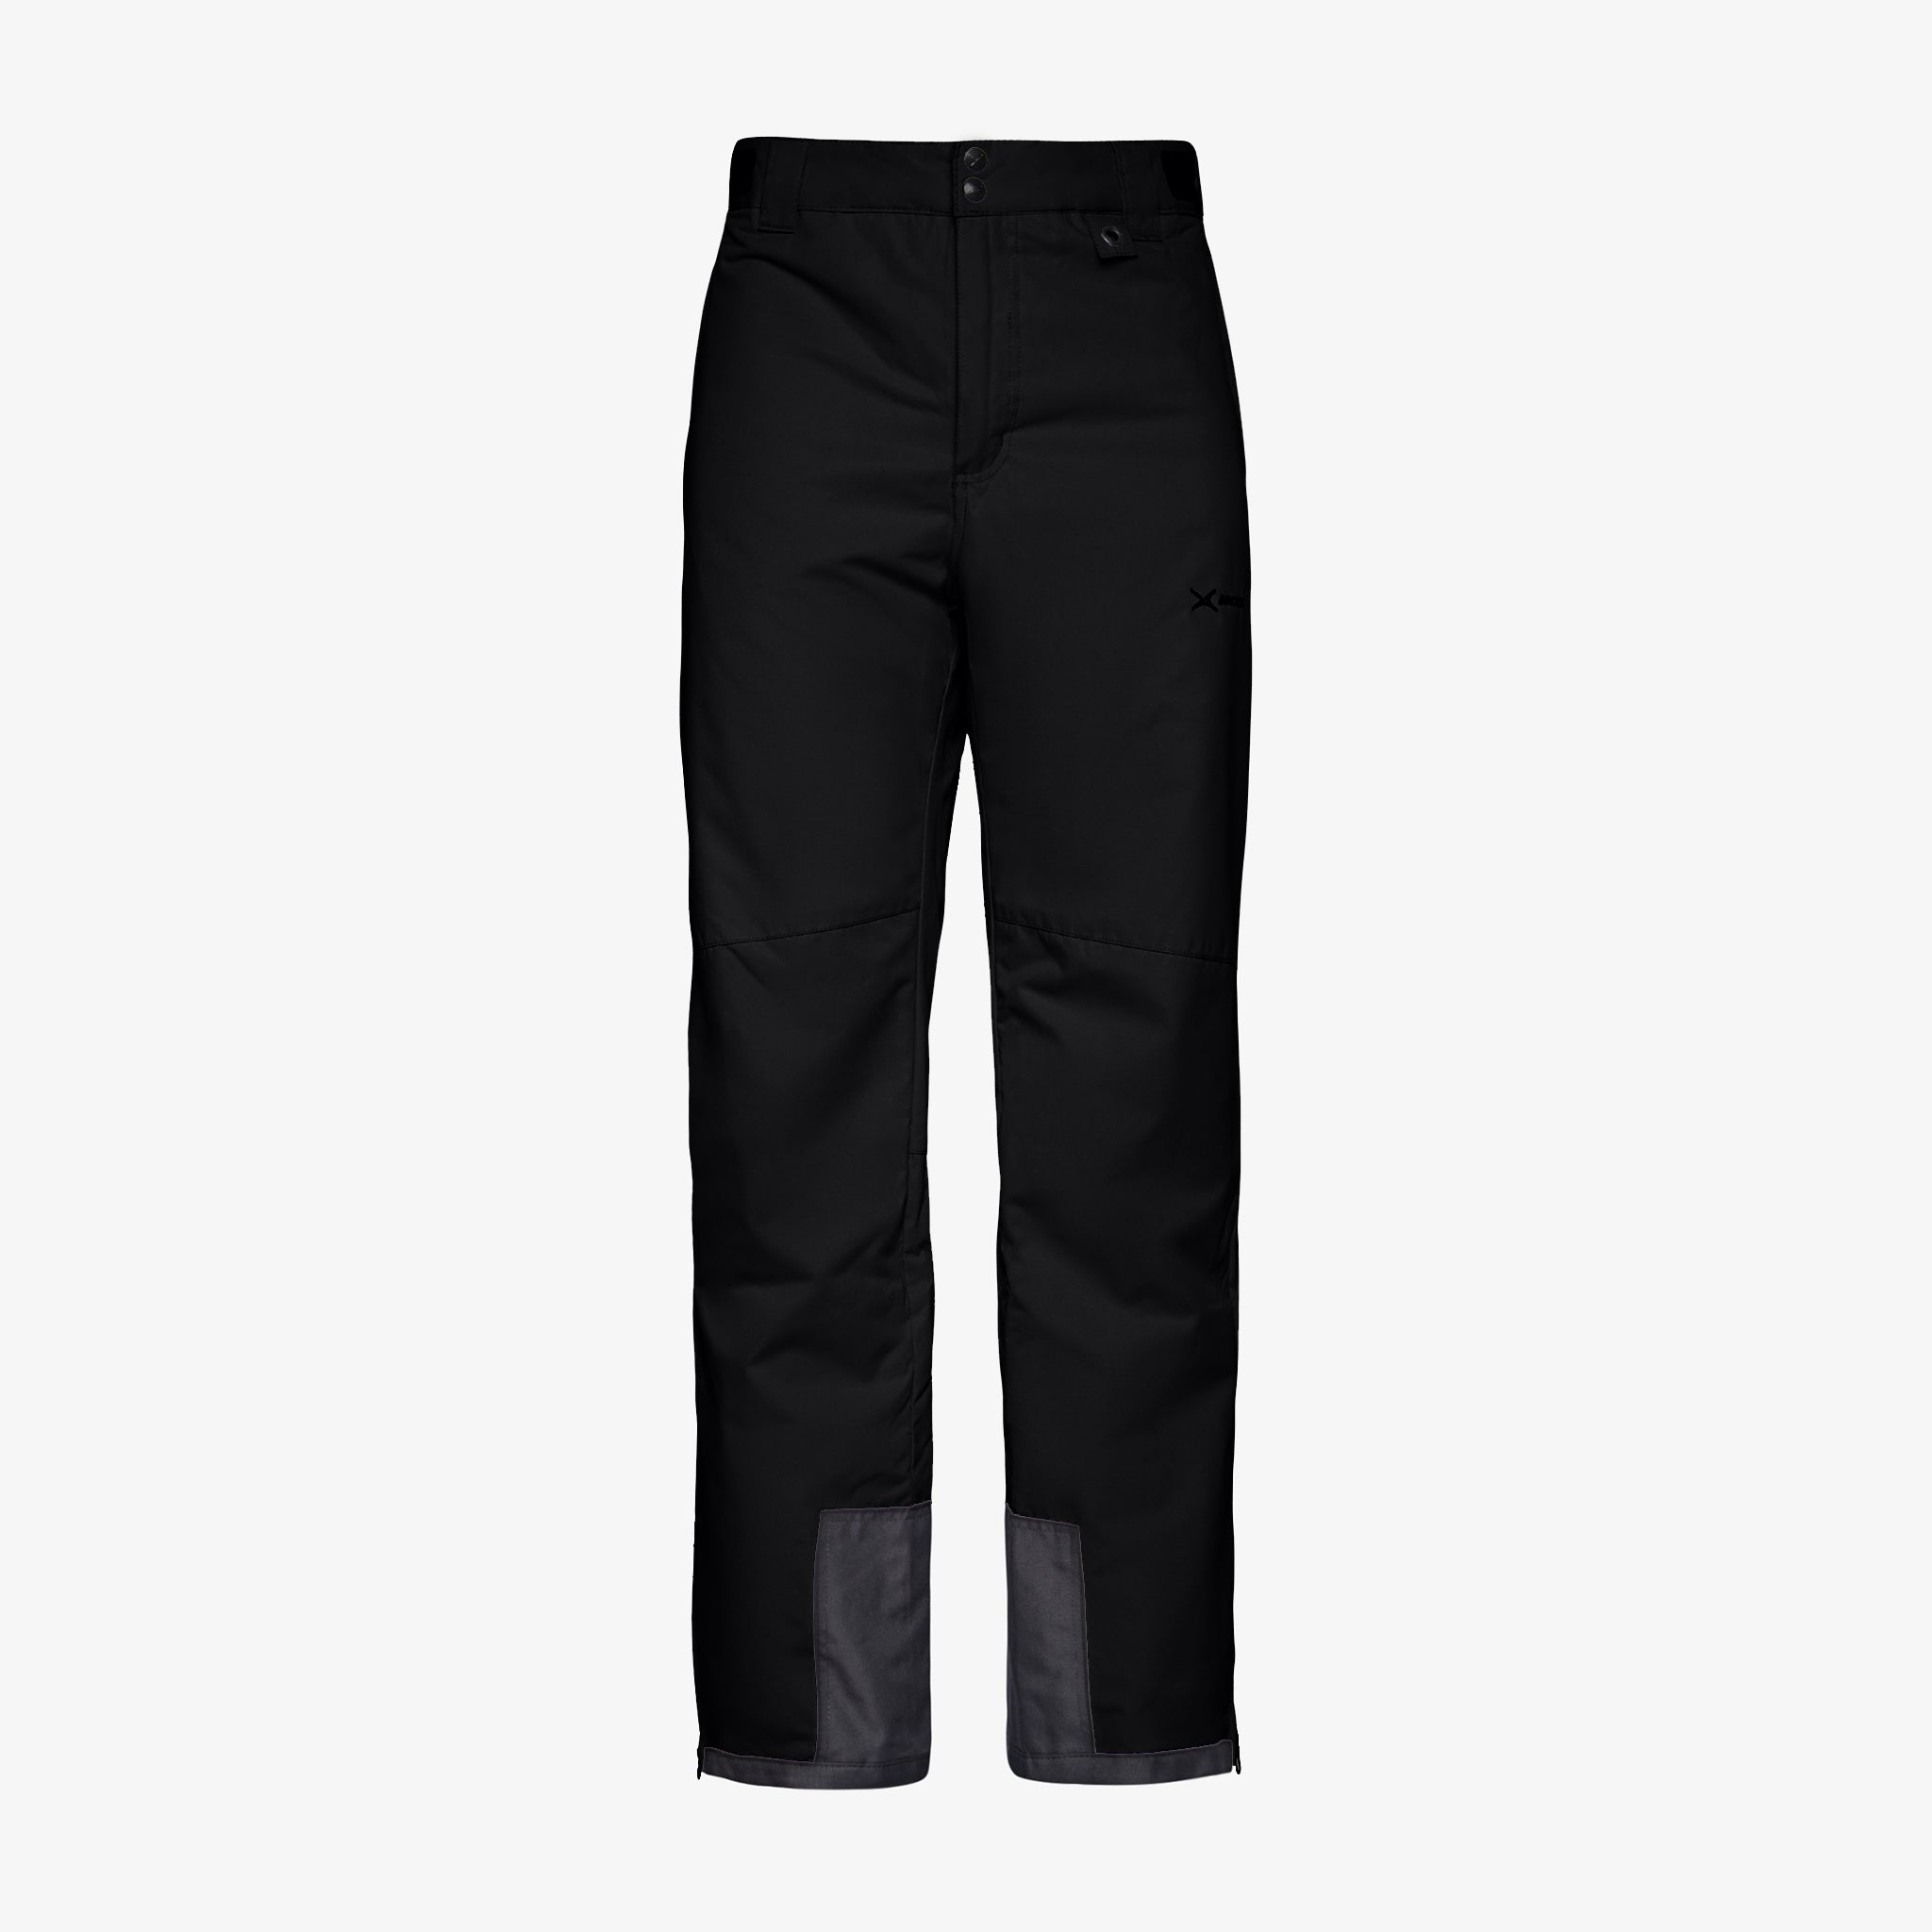 Men's Insulated Snow Pants-Black